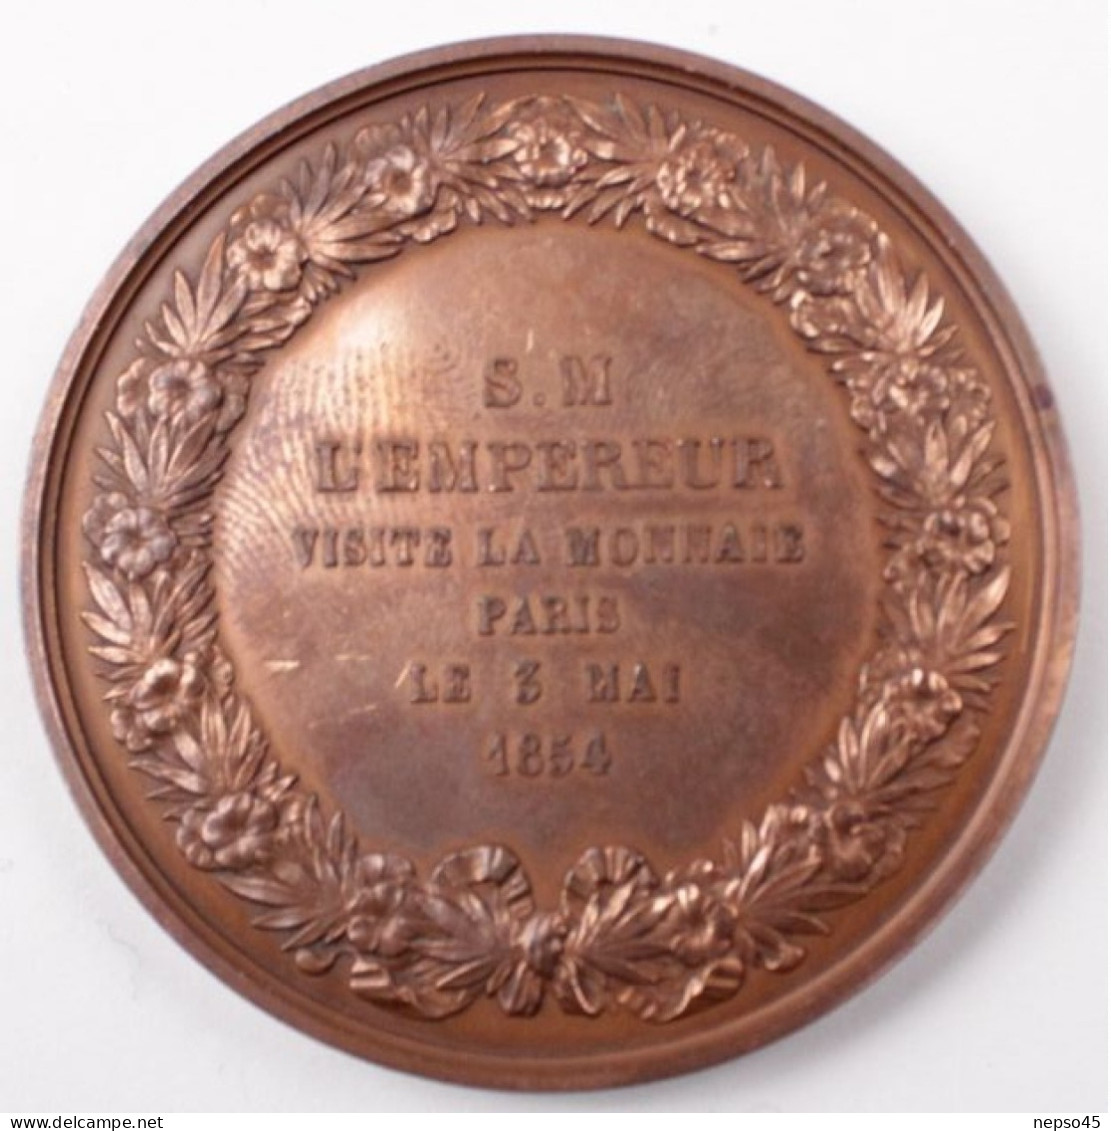 Médaille De Table Commémorative.Bronze.Empereur Napoléon III Visite La Monnaie.Paris 3 Mai 1854. - Monarquía / Nobleza